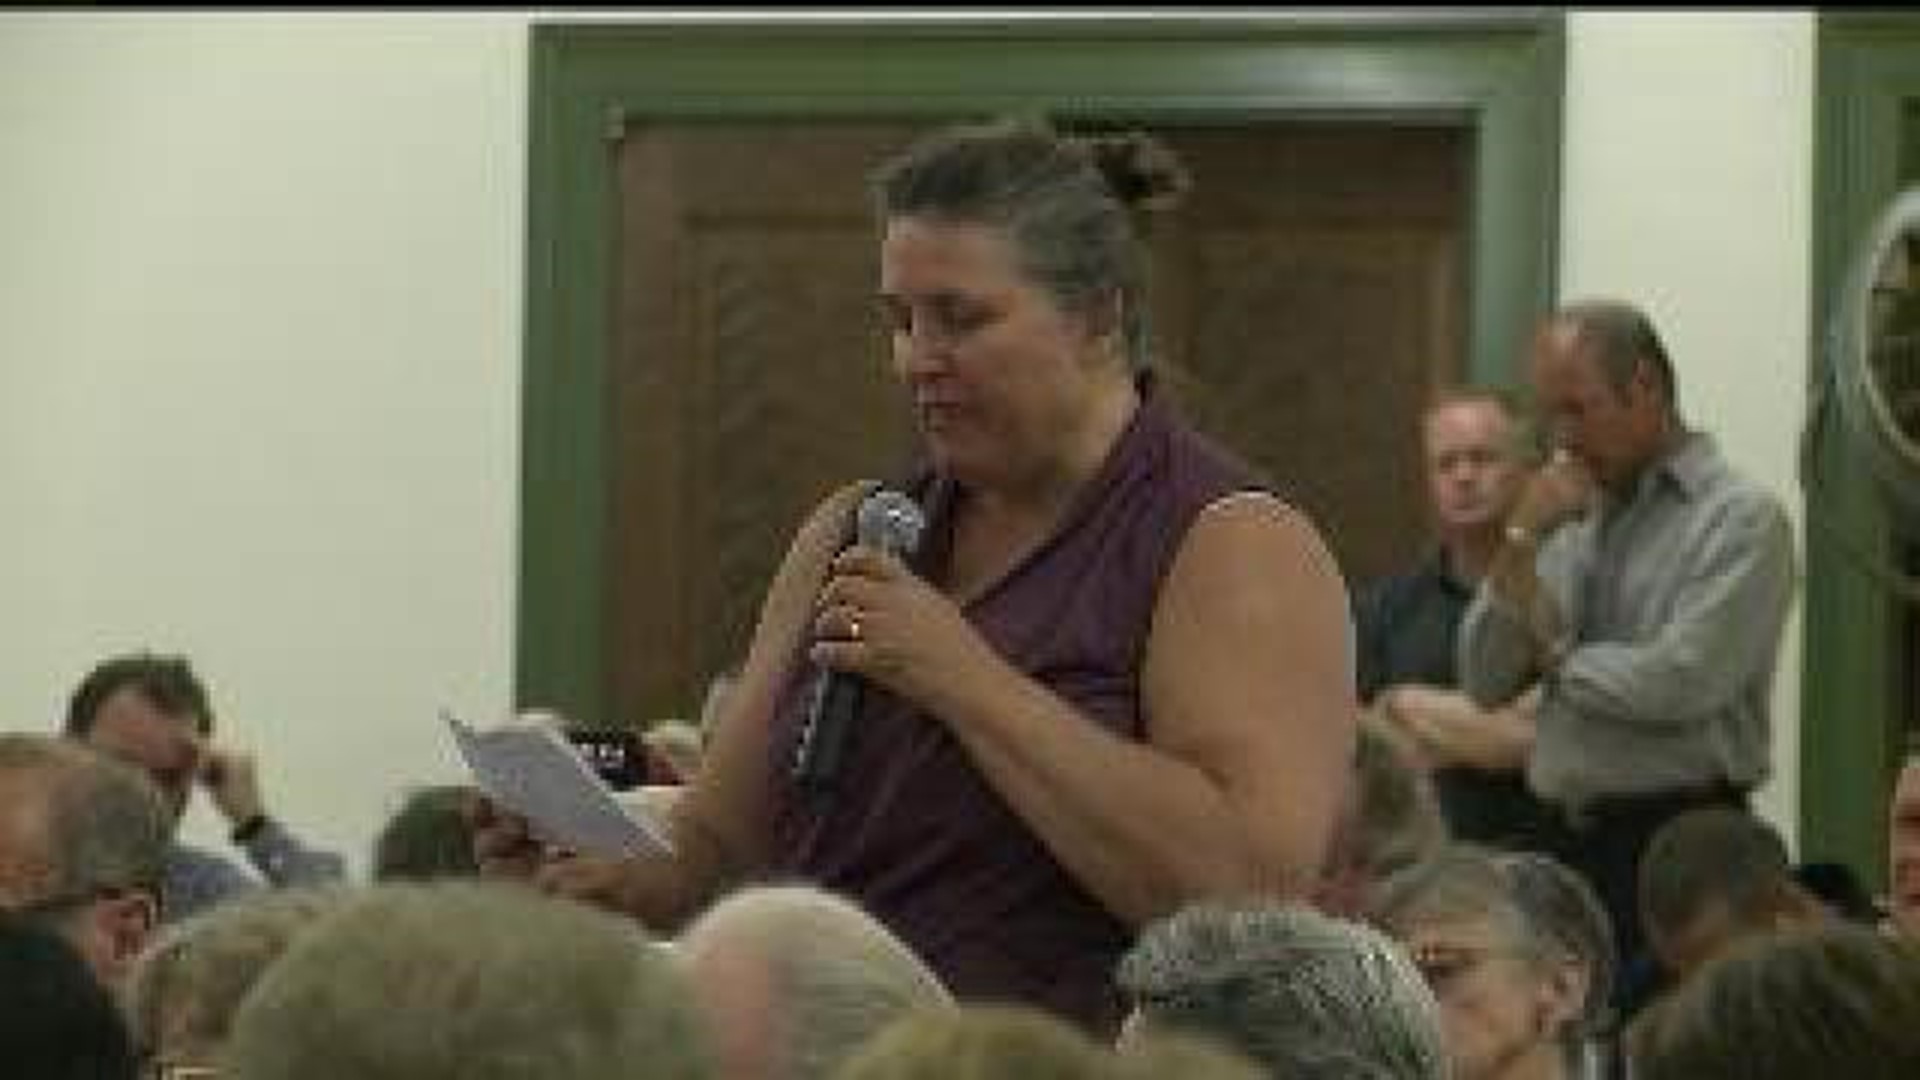 Dixon citizens suggest goals for settlement money